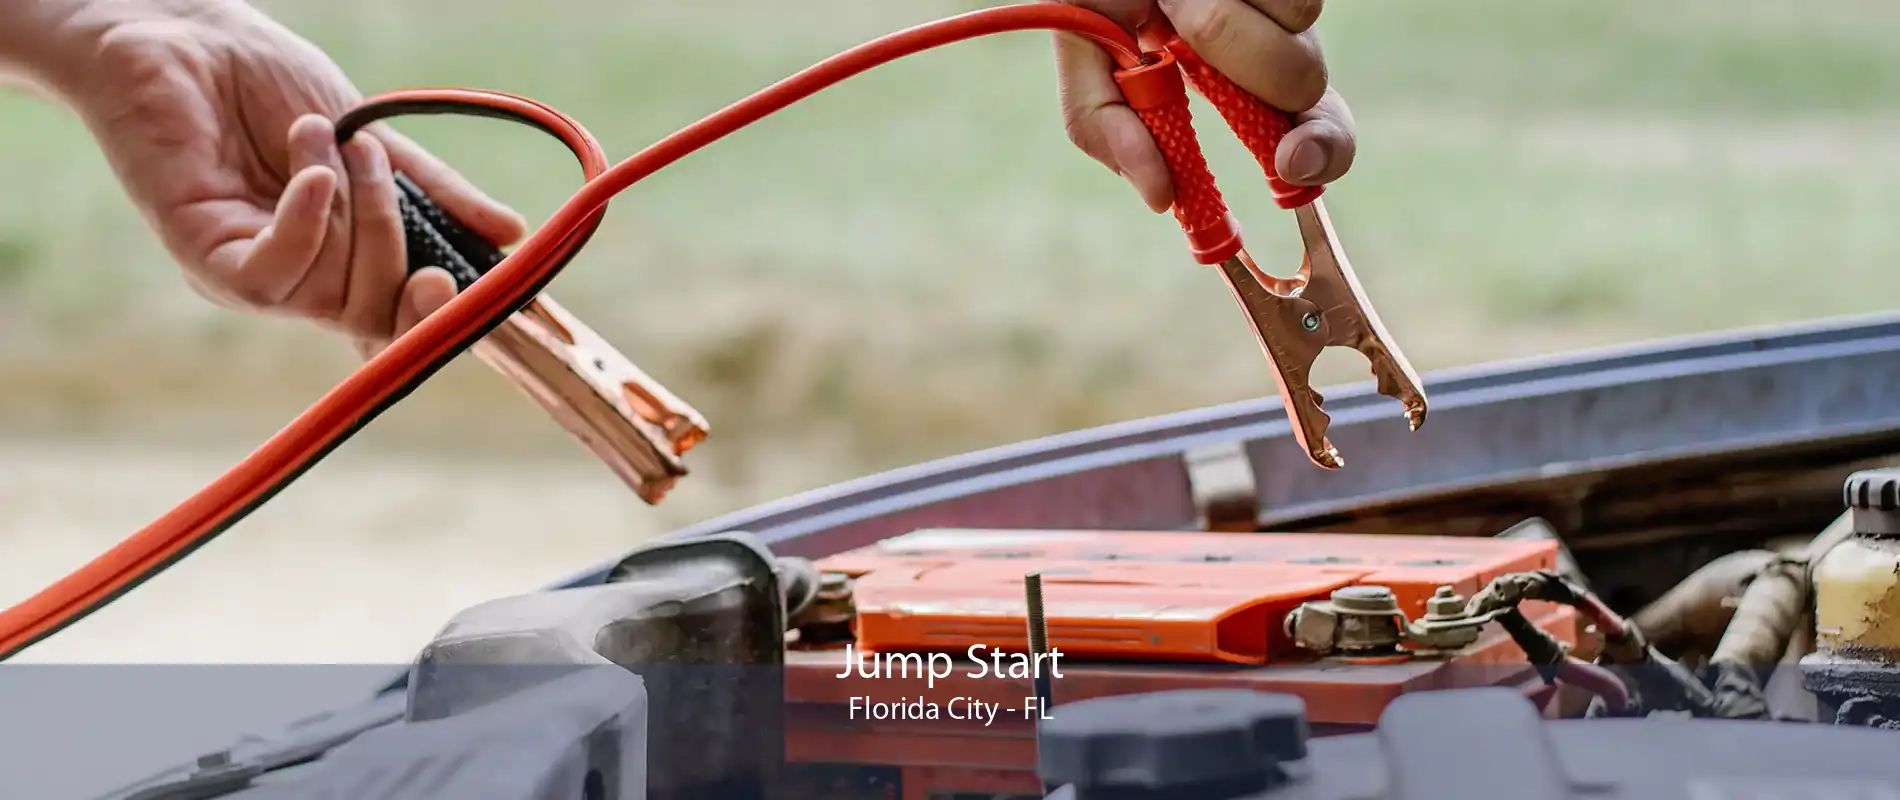 Jump Start Florida City - FL